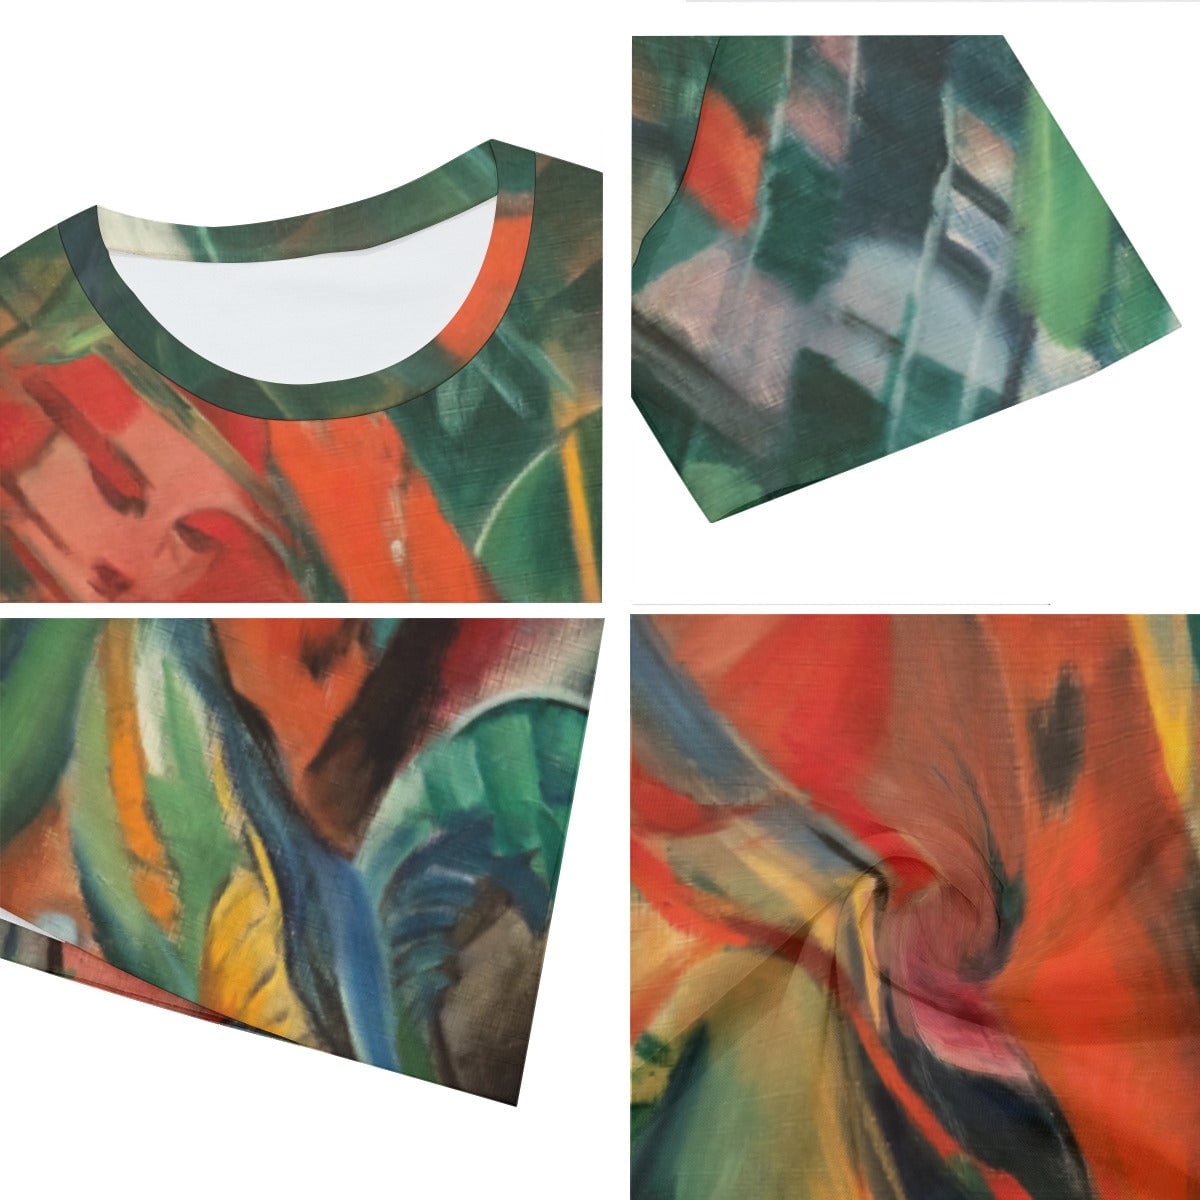 Franz Marc’s In the Rain T-Shirt - Expressionism Art Tee